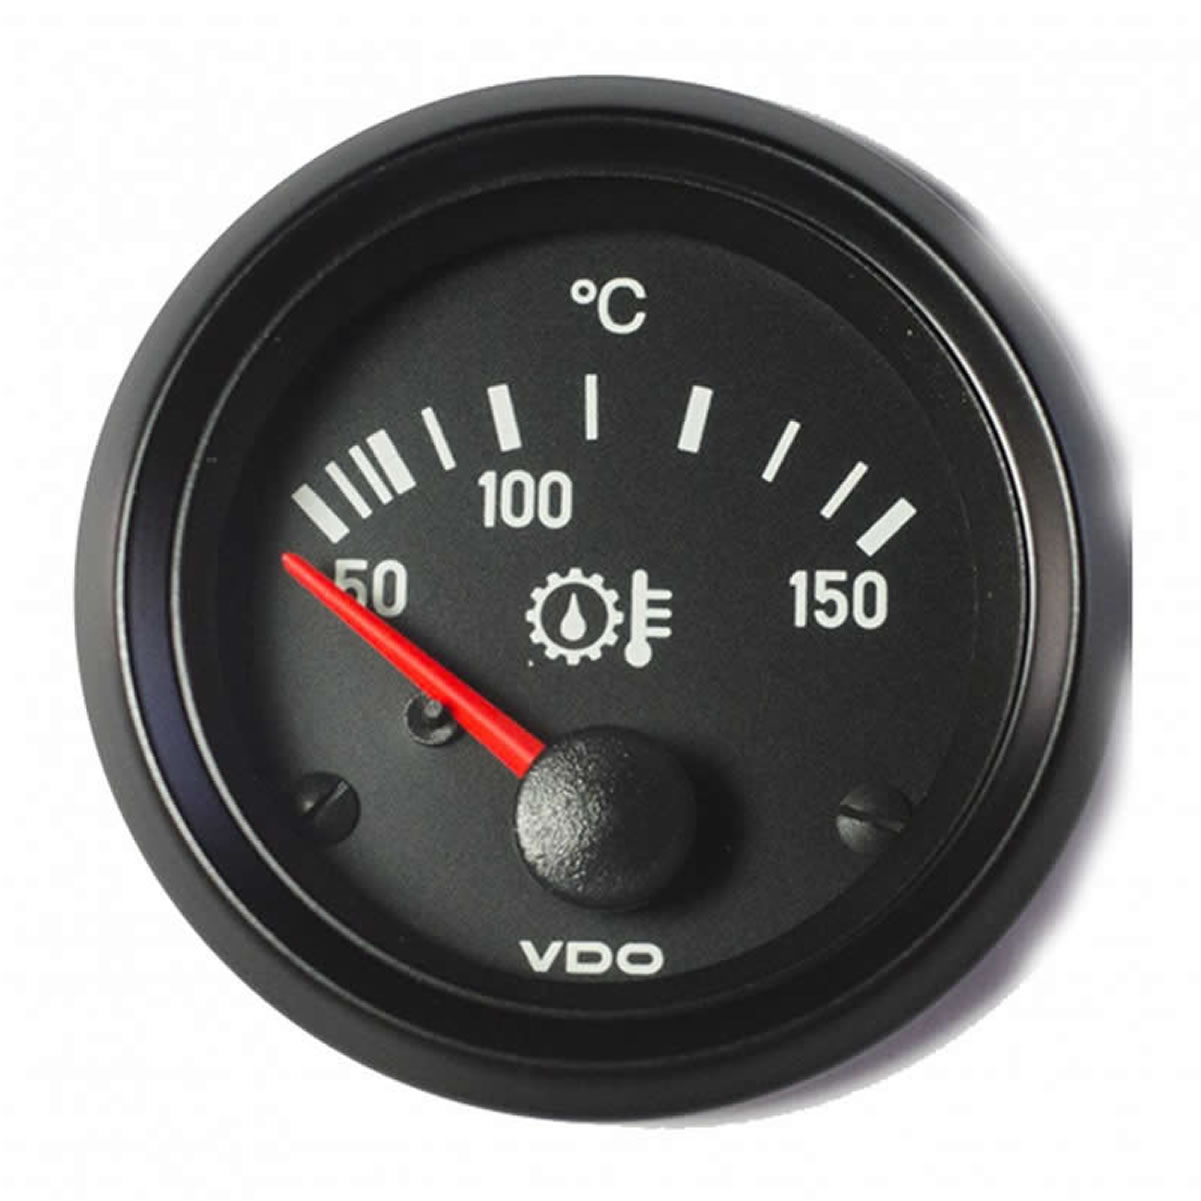 VDO Gear oil temperature Gauge 150 deg C